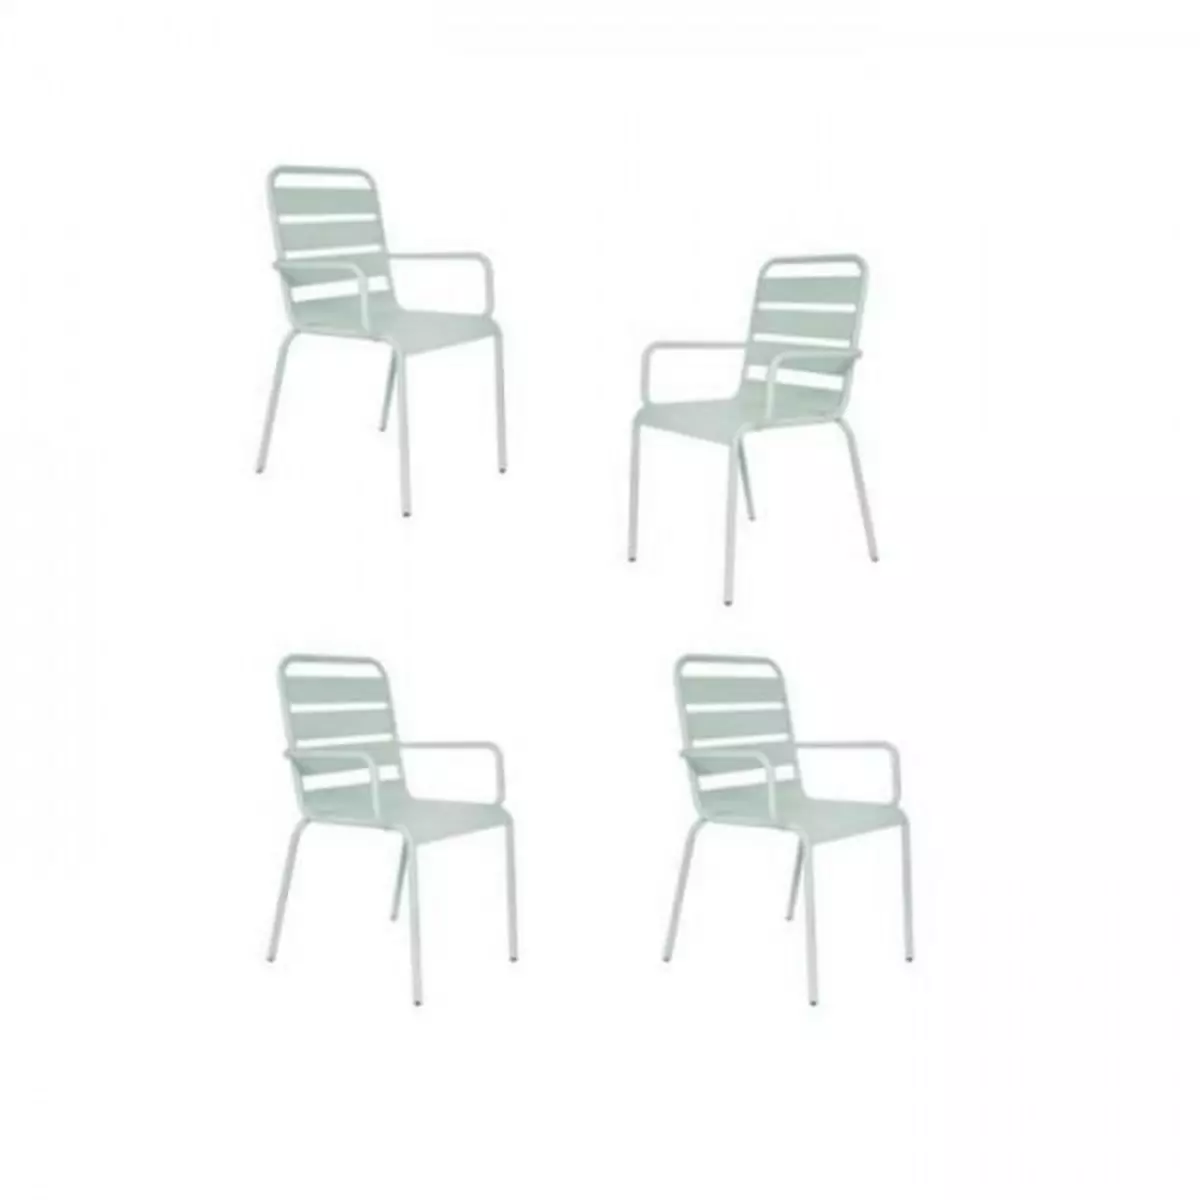 MARKET24 Lot de 4 fauteuils de jardin - Acier - Vert Céladon